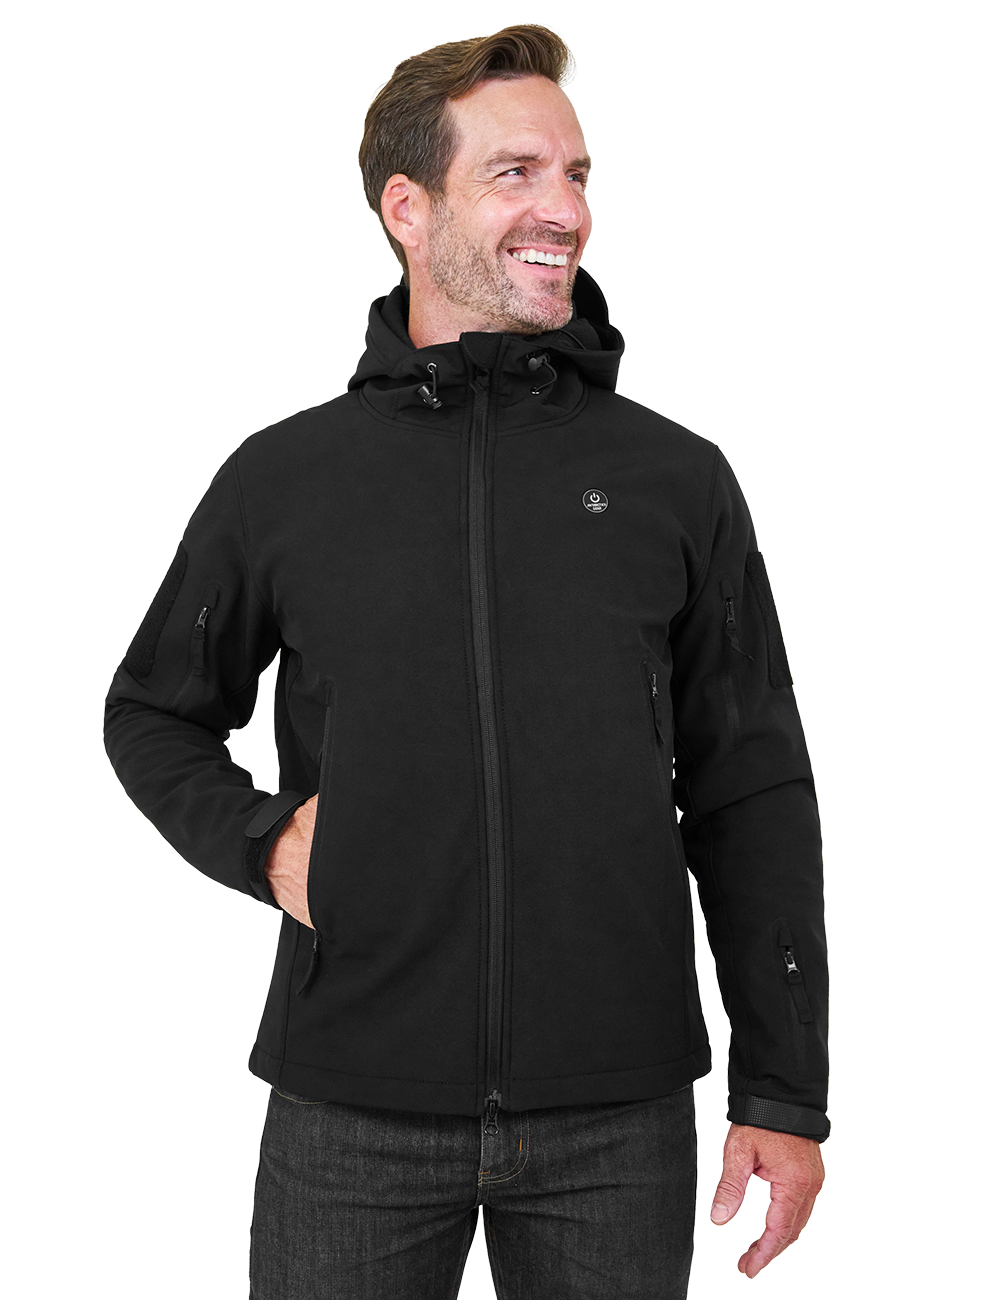 ANTARCTICA GEAR Heated Jacket for Men and Women, Winter Coat Soft Shell Heating Hood Jacket